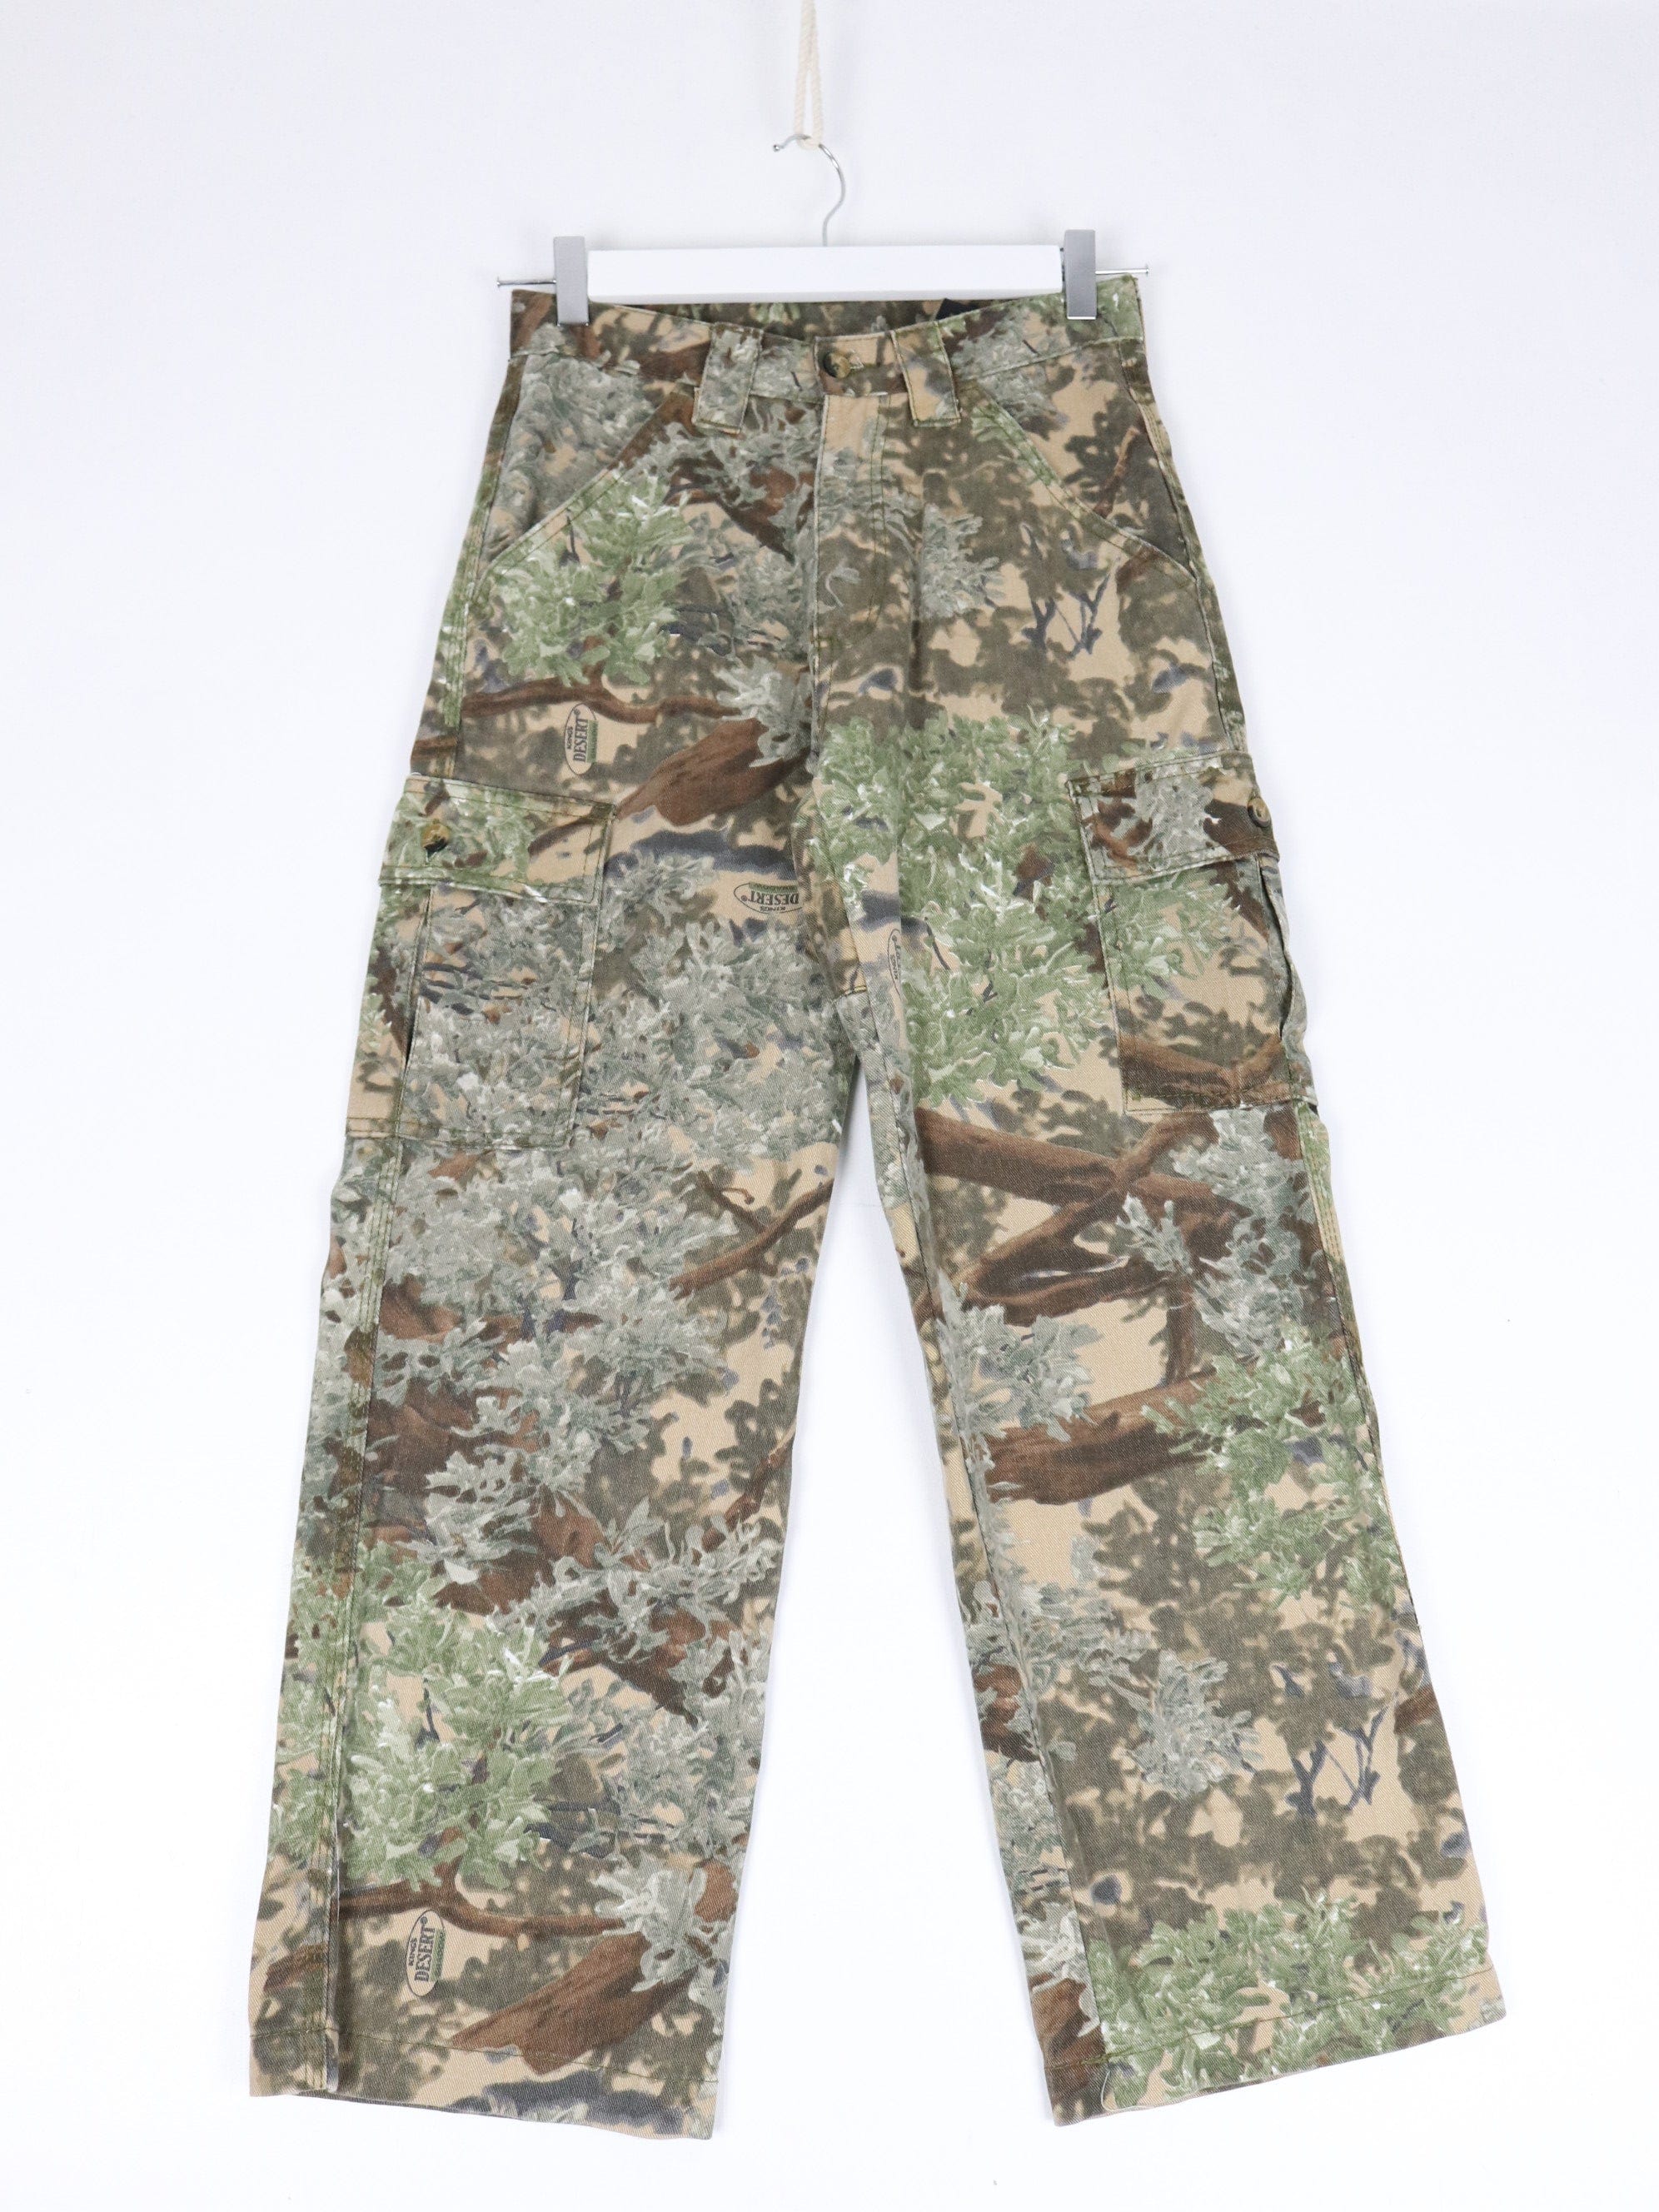 Rothco Pants Mens Medium Green Camo Cargo Military Army 32 x 30